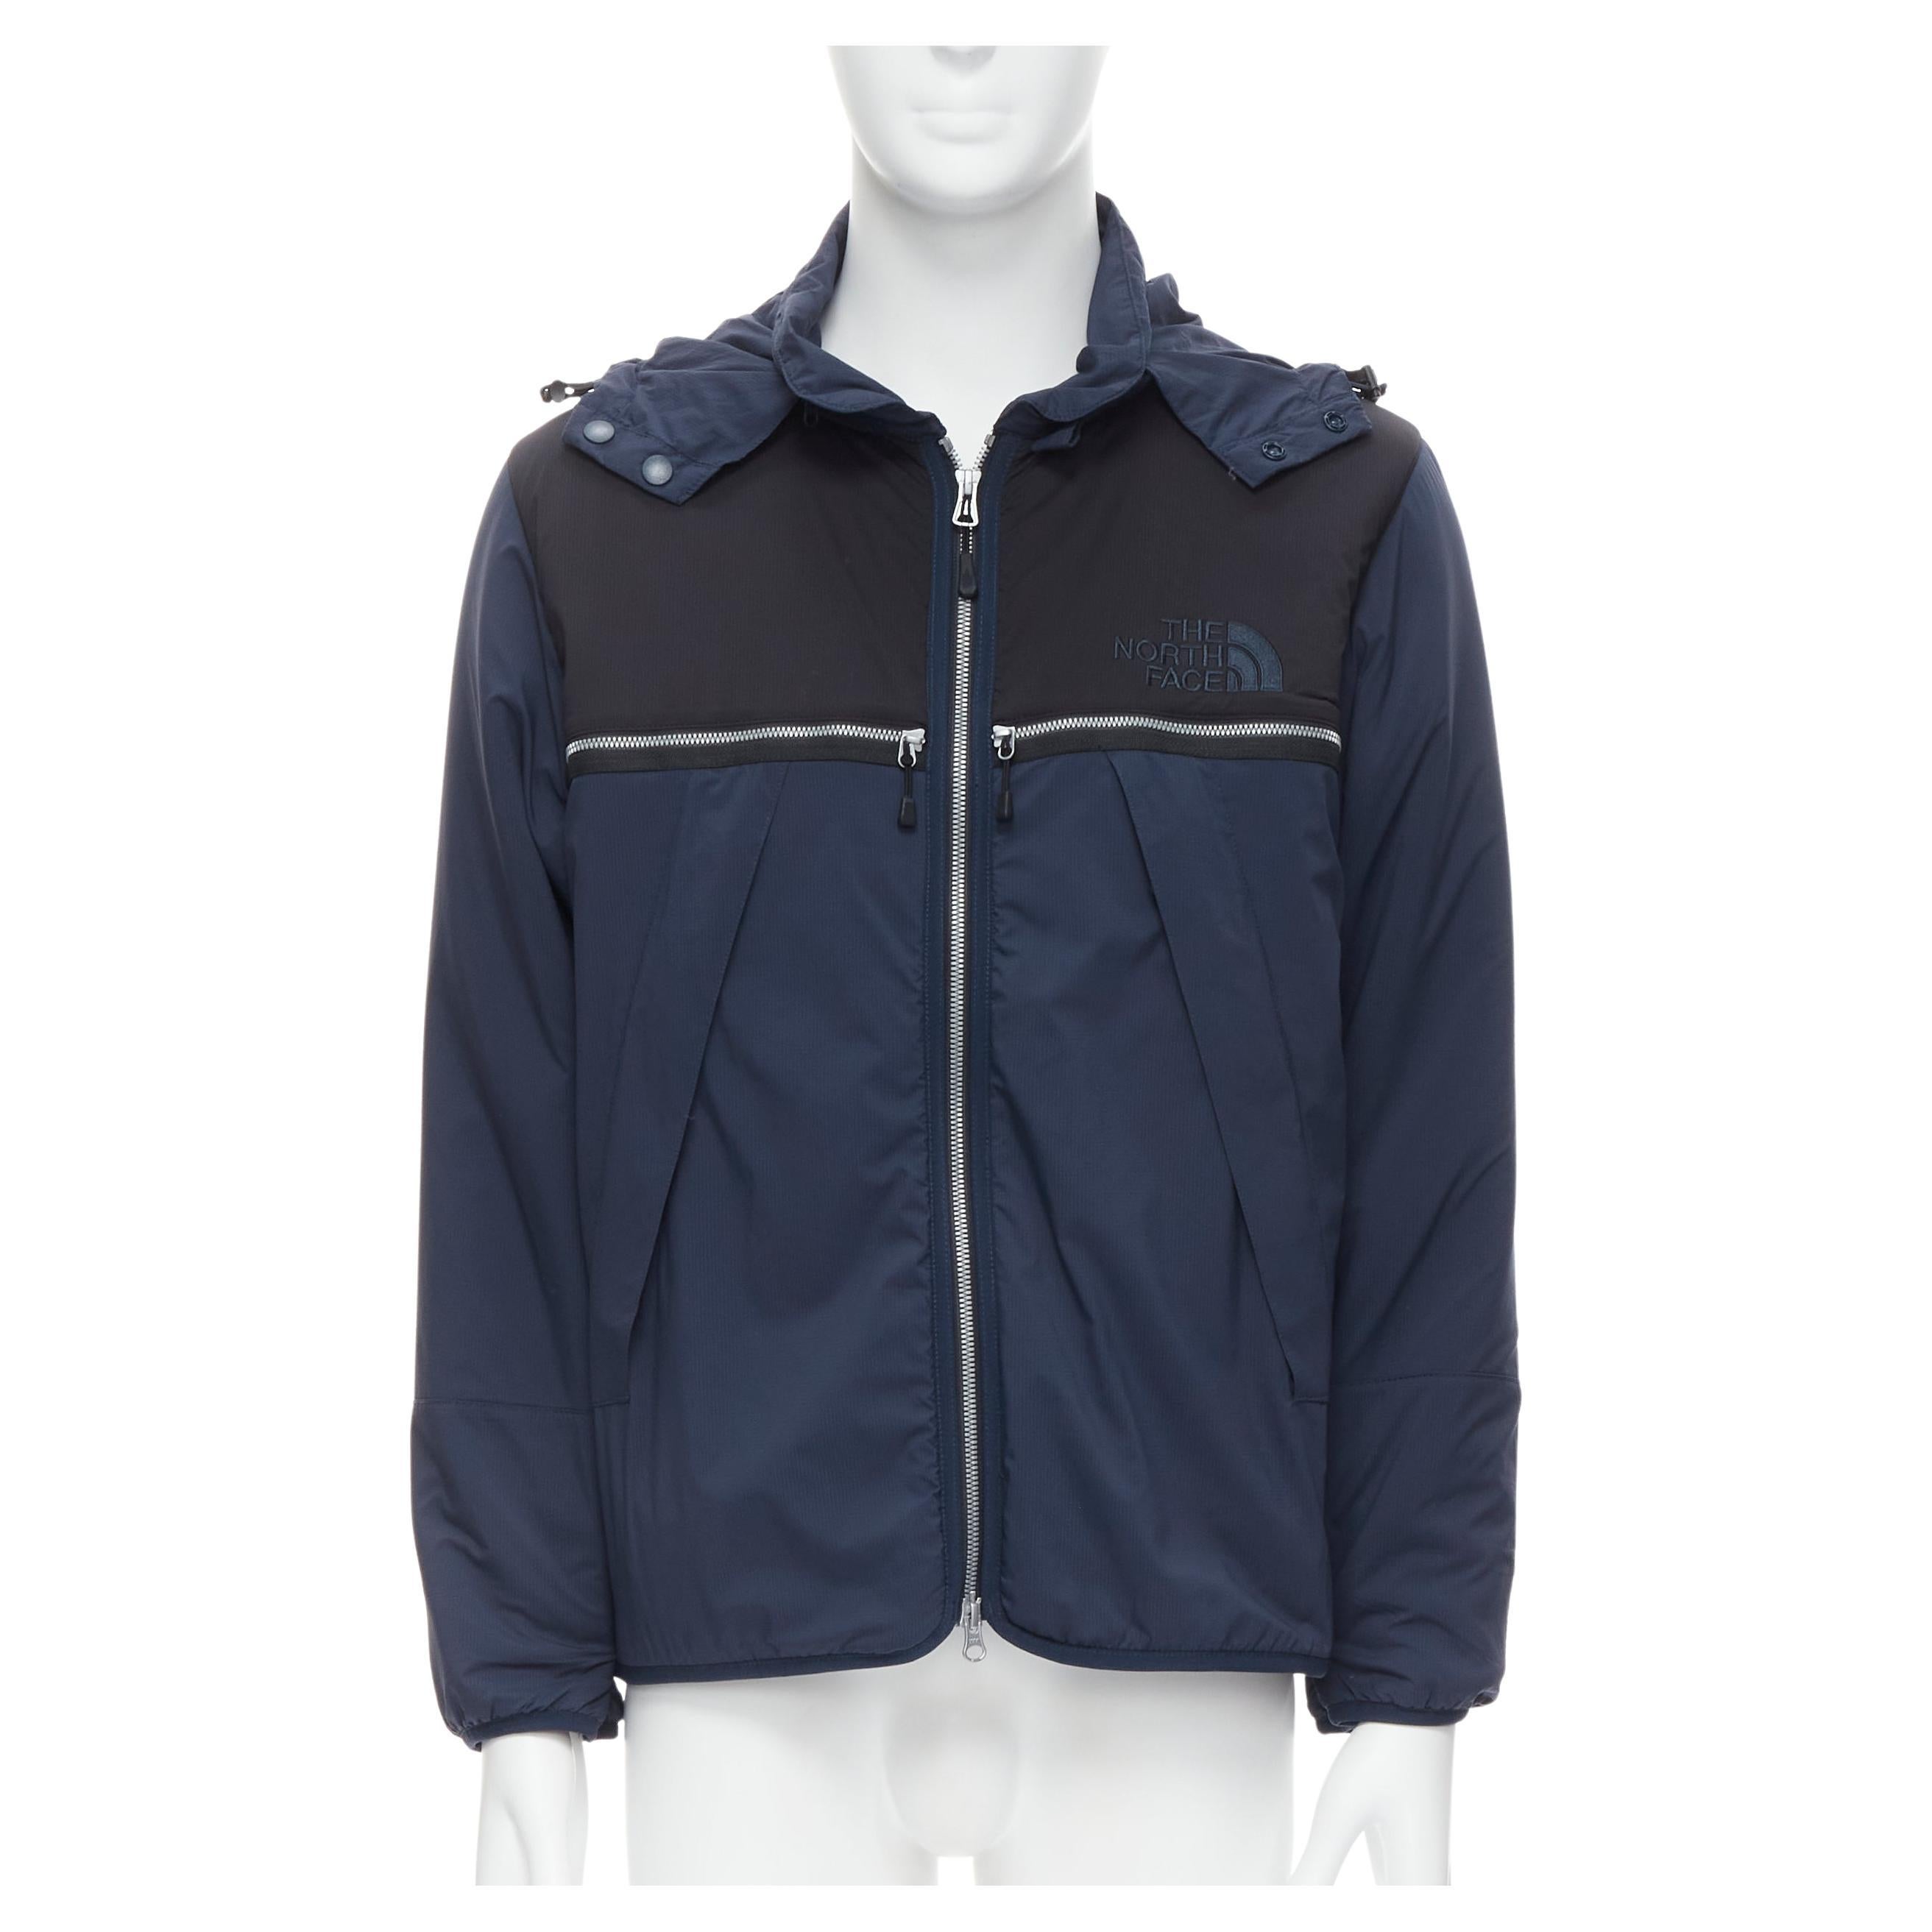 new THE NORTH FACE KK Fleece Work Urban Explore Polartec fleece jacket XS S For Sale